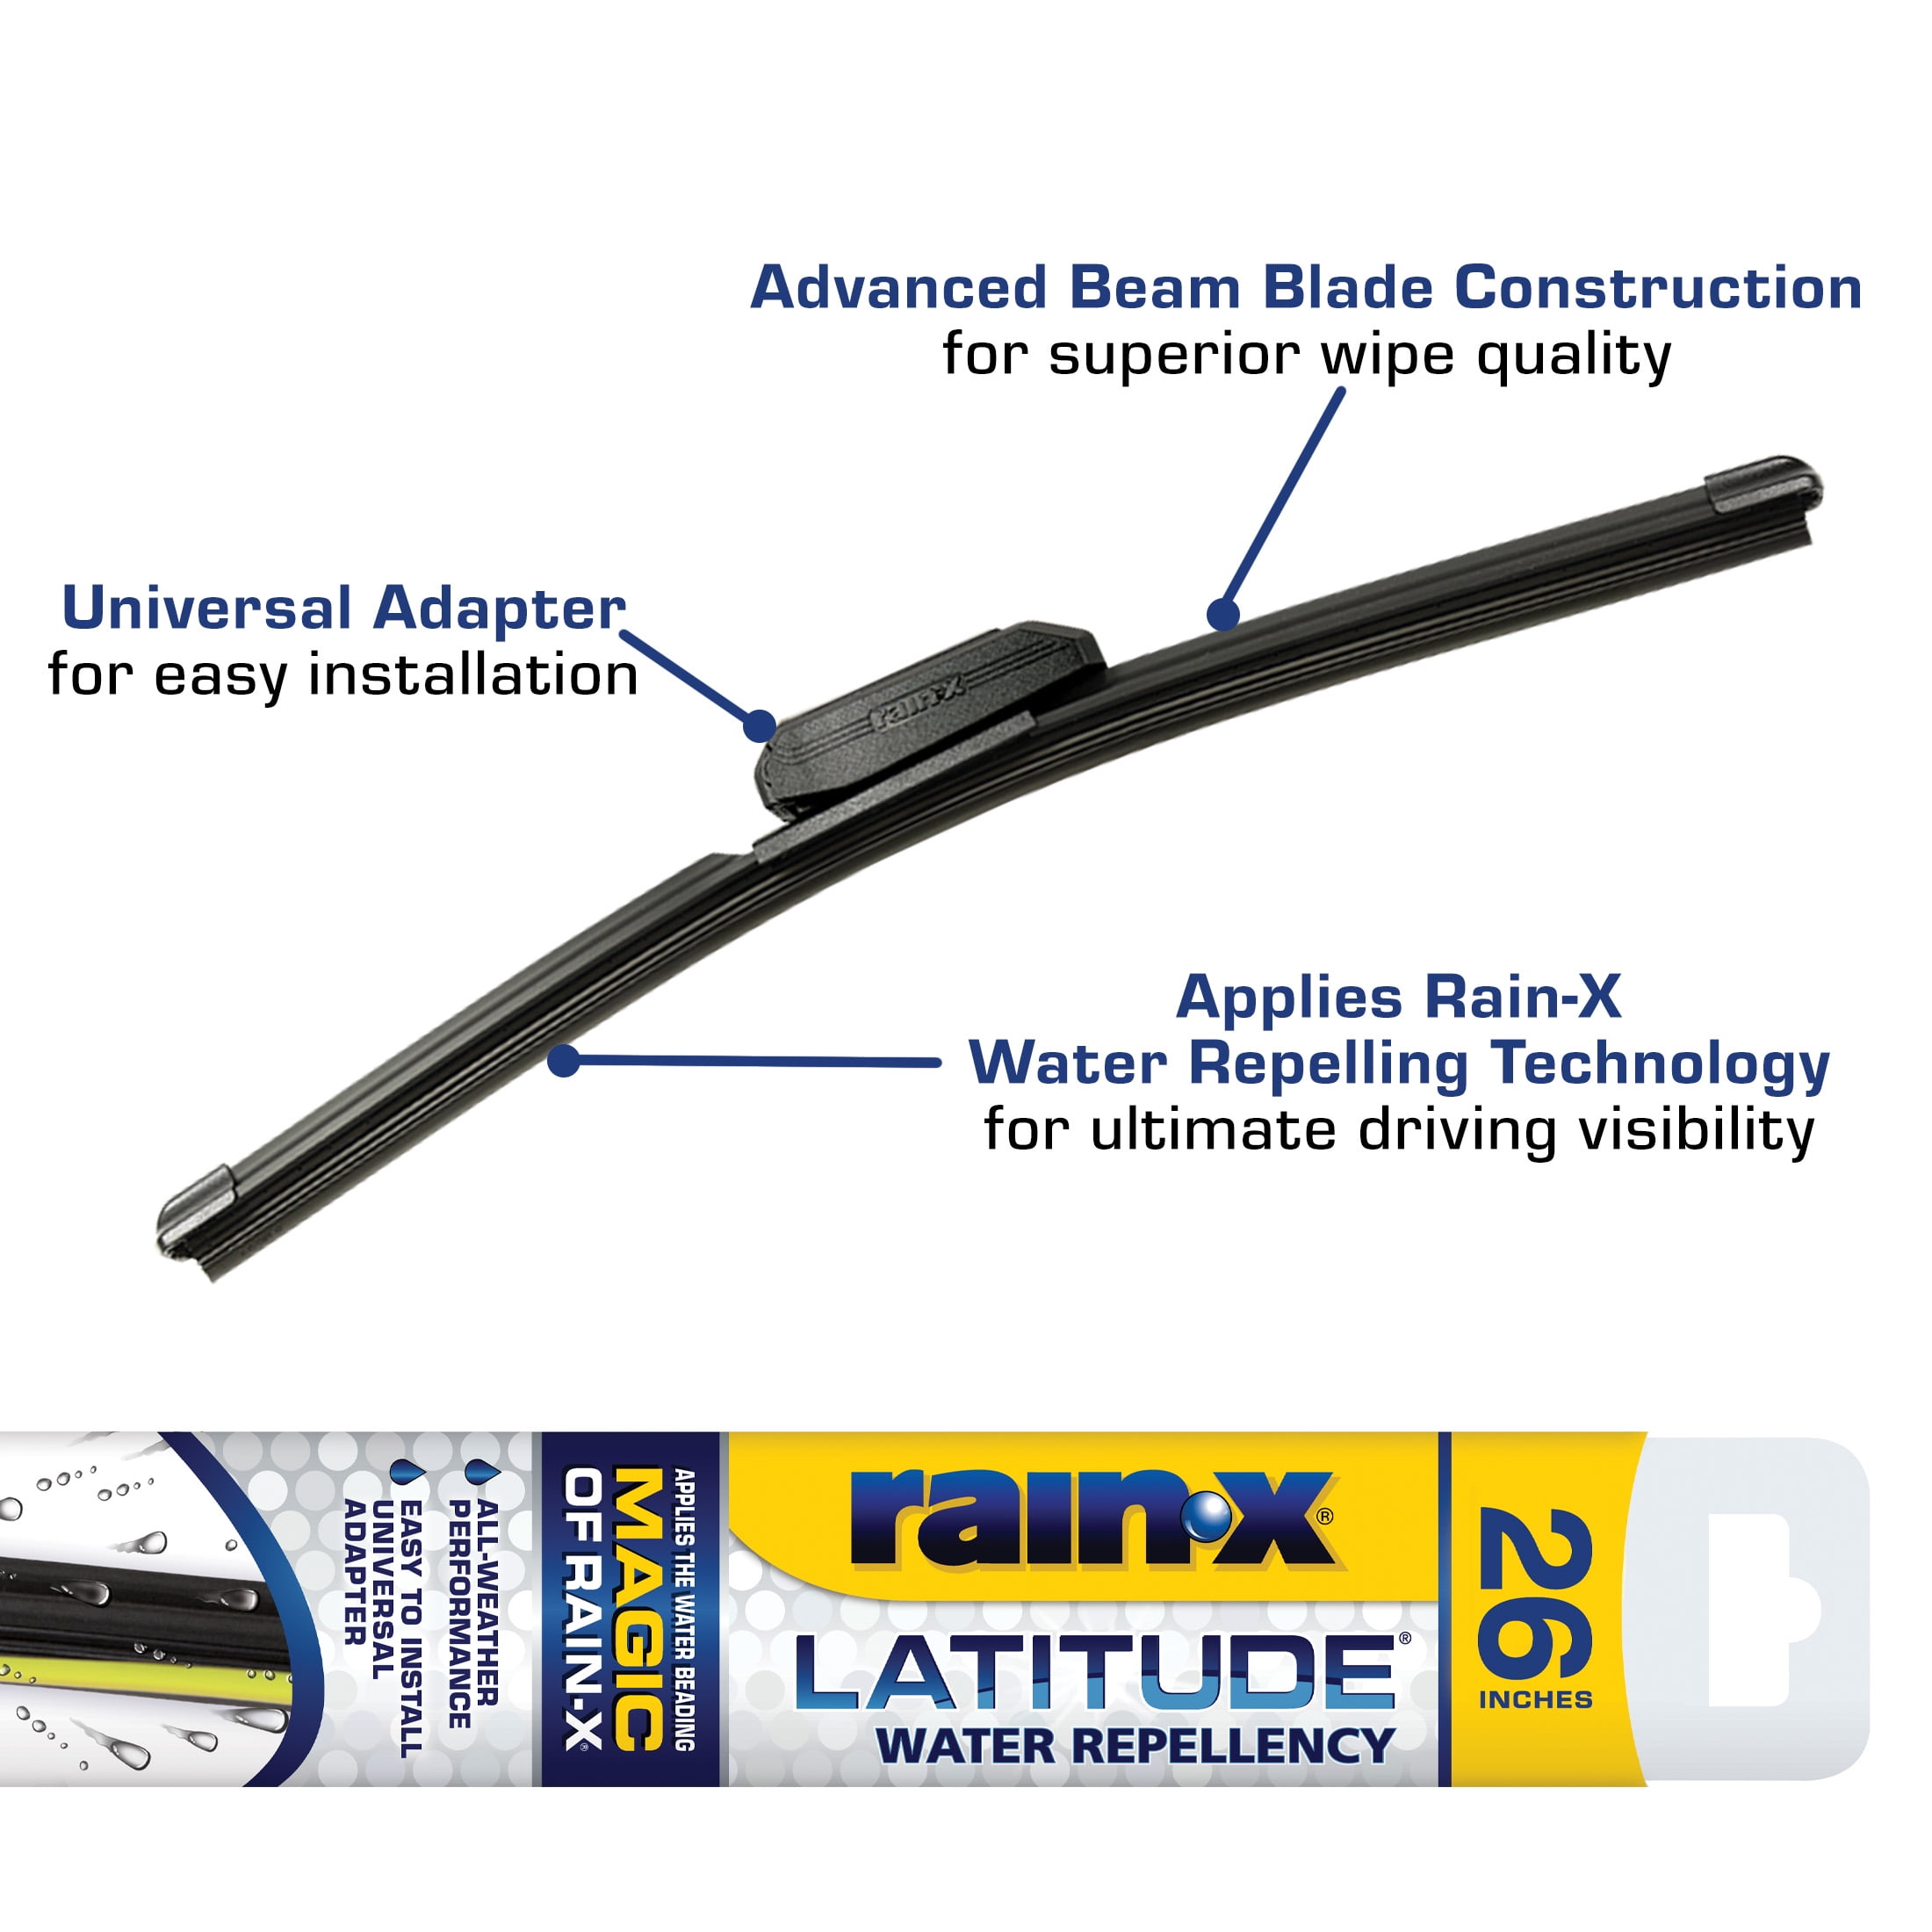 Rain-X Latitude Water Repellency 26" 2-in-1 Windshield Wiper Blade